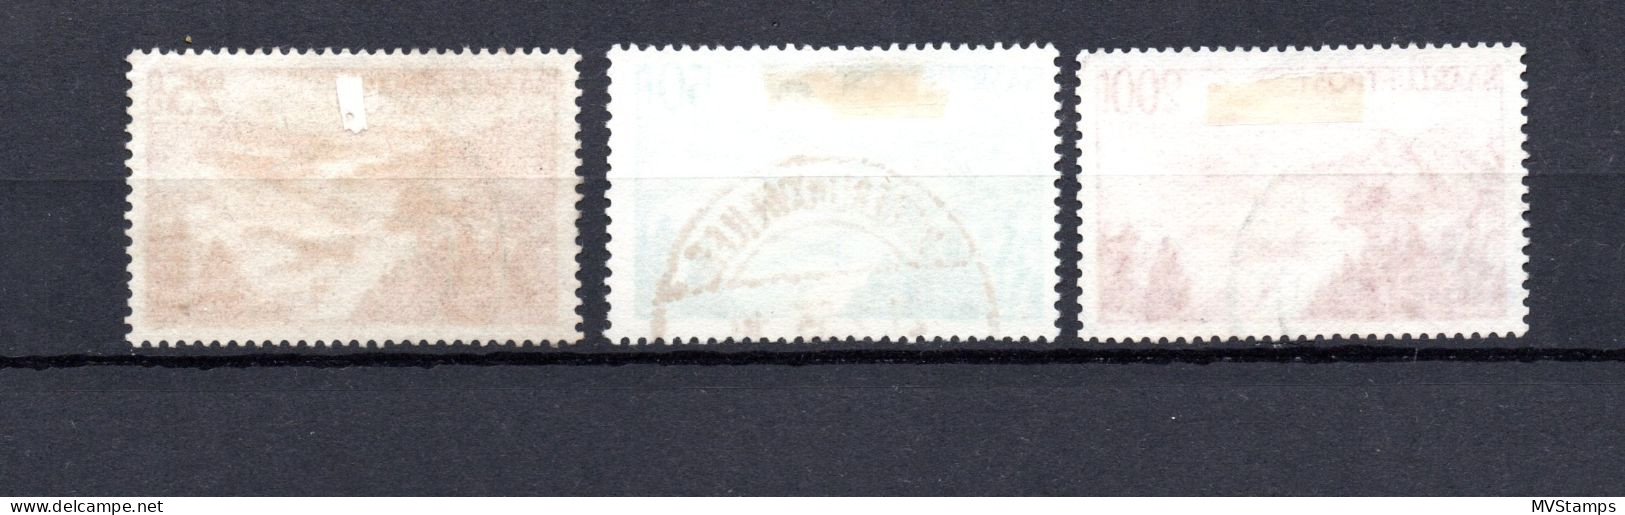 Saar/Germany 1948 Old Set Airmail Stamps (Michel 252/54) Nice Used - Airmail